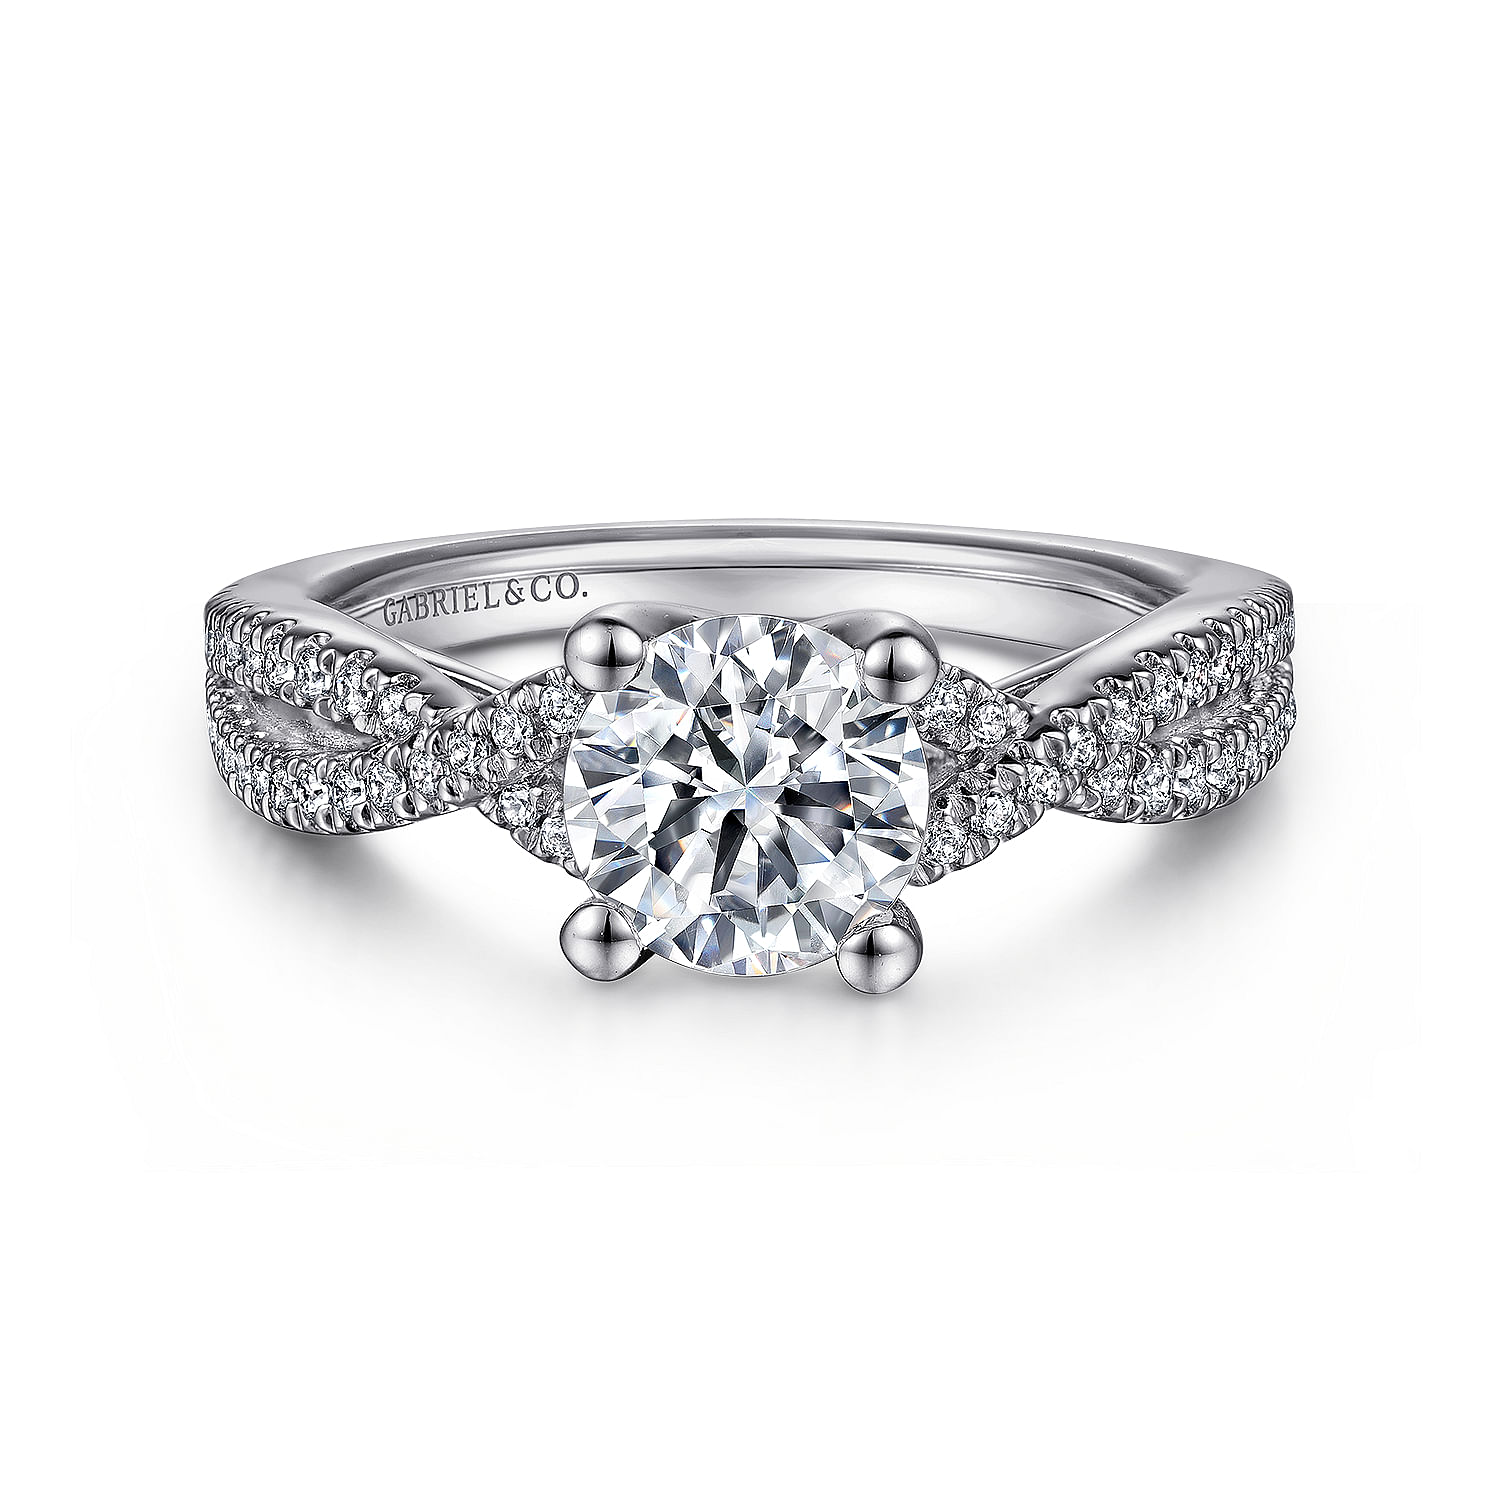 Gina---14K-White-Gold-Round-Twisted-Diamond-Engagement-Ring1